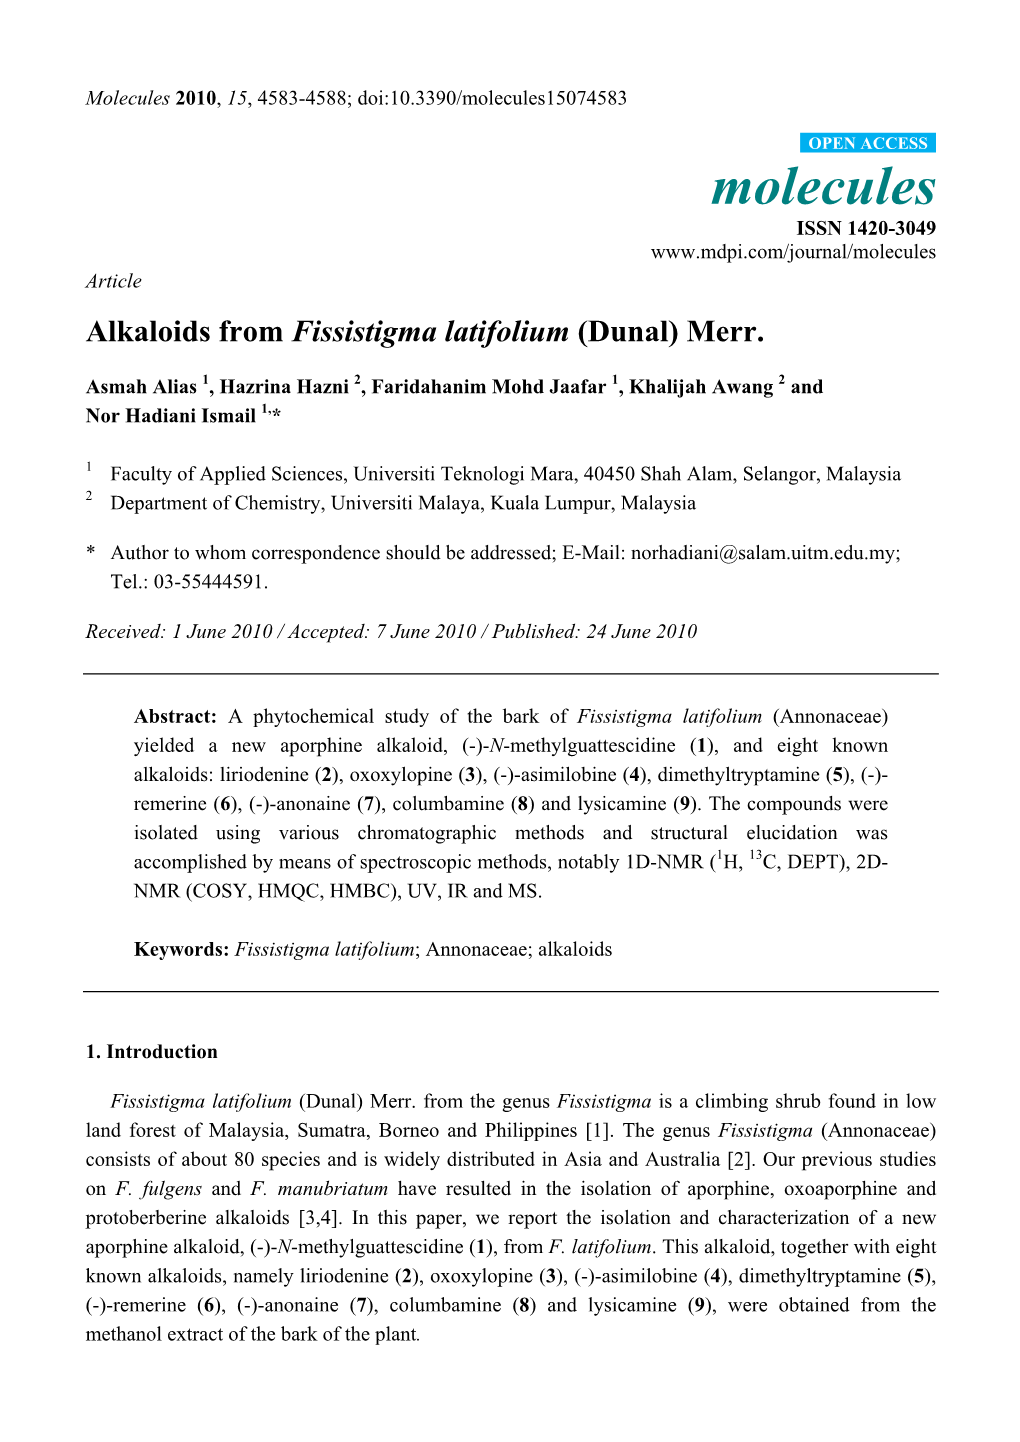 Alkaloids from Fissistigma Latifolium (Dunal) Merr